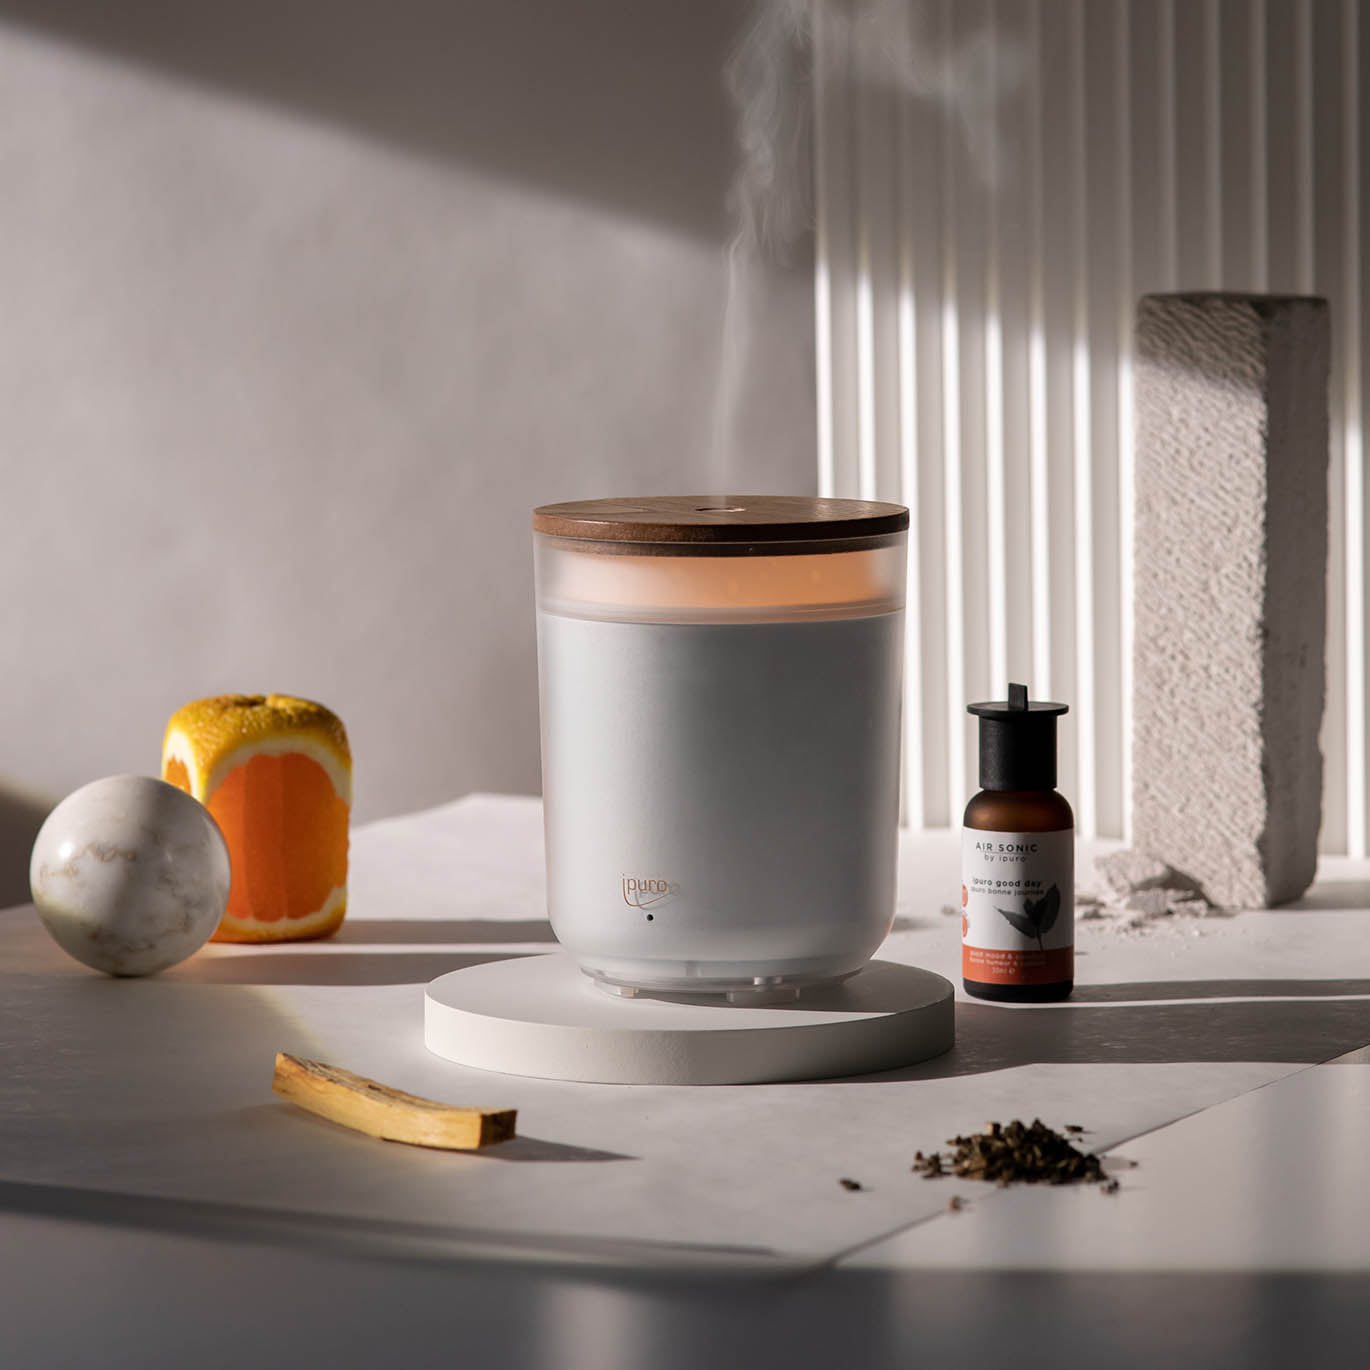 AIR SONIC ipuro aroma candle Electric aroma diffuser – IPURO